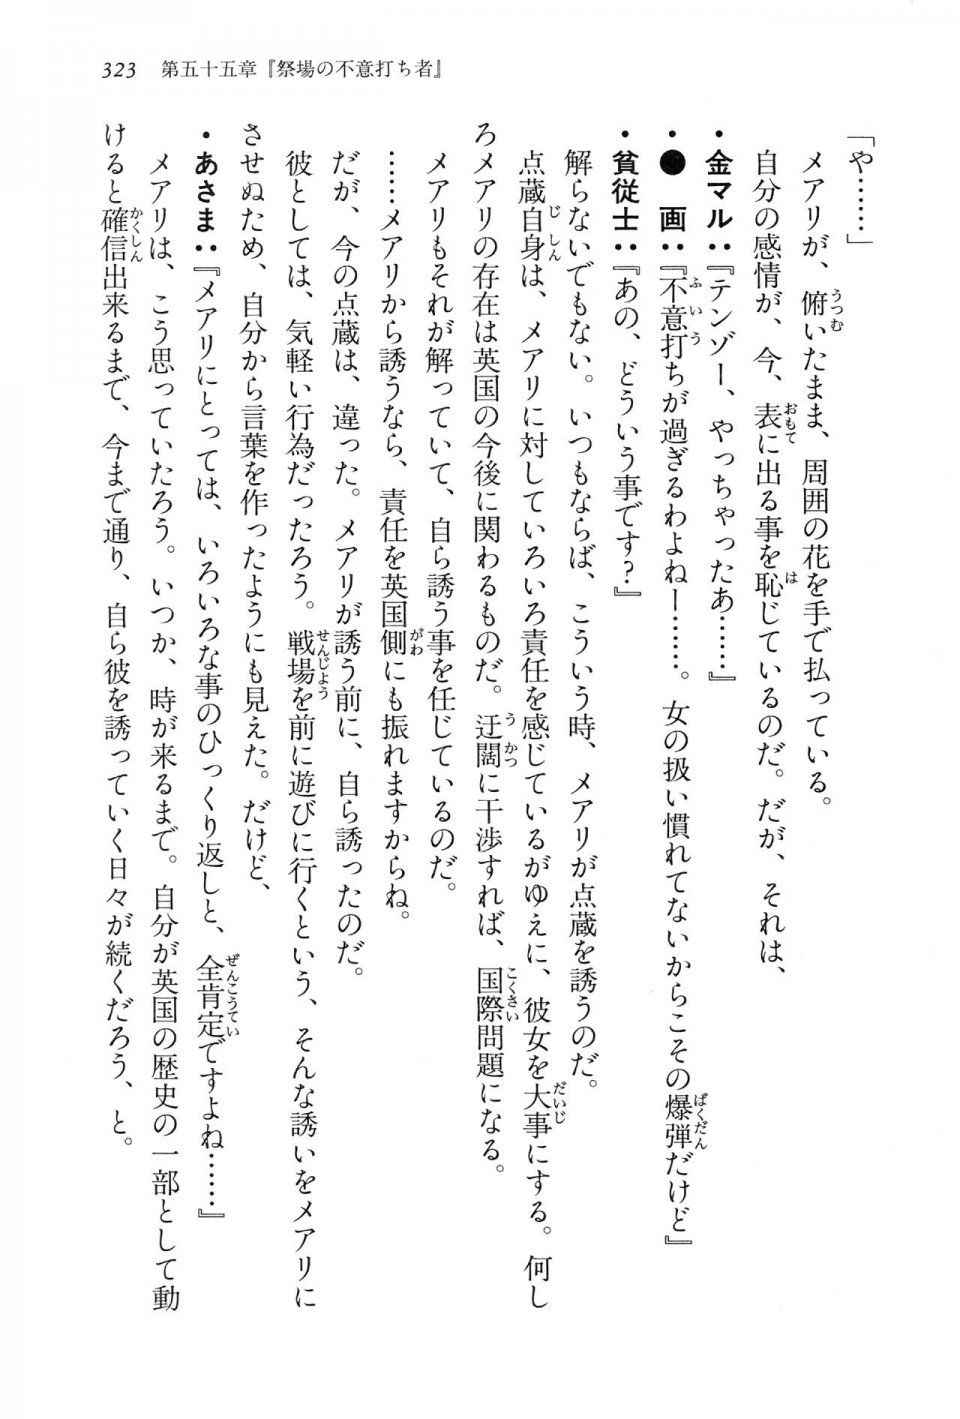 Kyoukai Senjou no Horizon LN Vol 15(6C) Part 1 - Photo #323